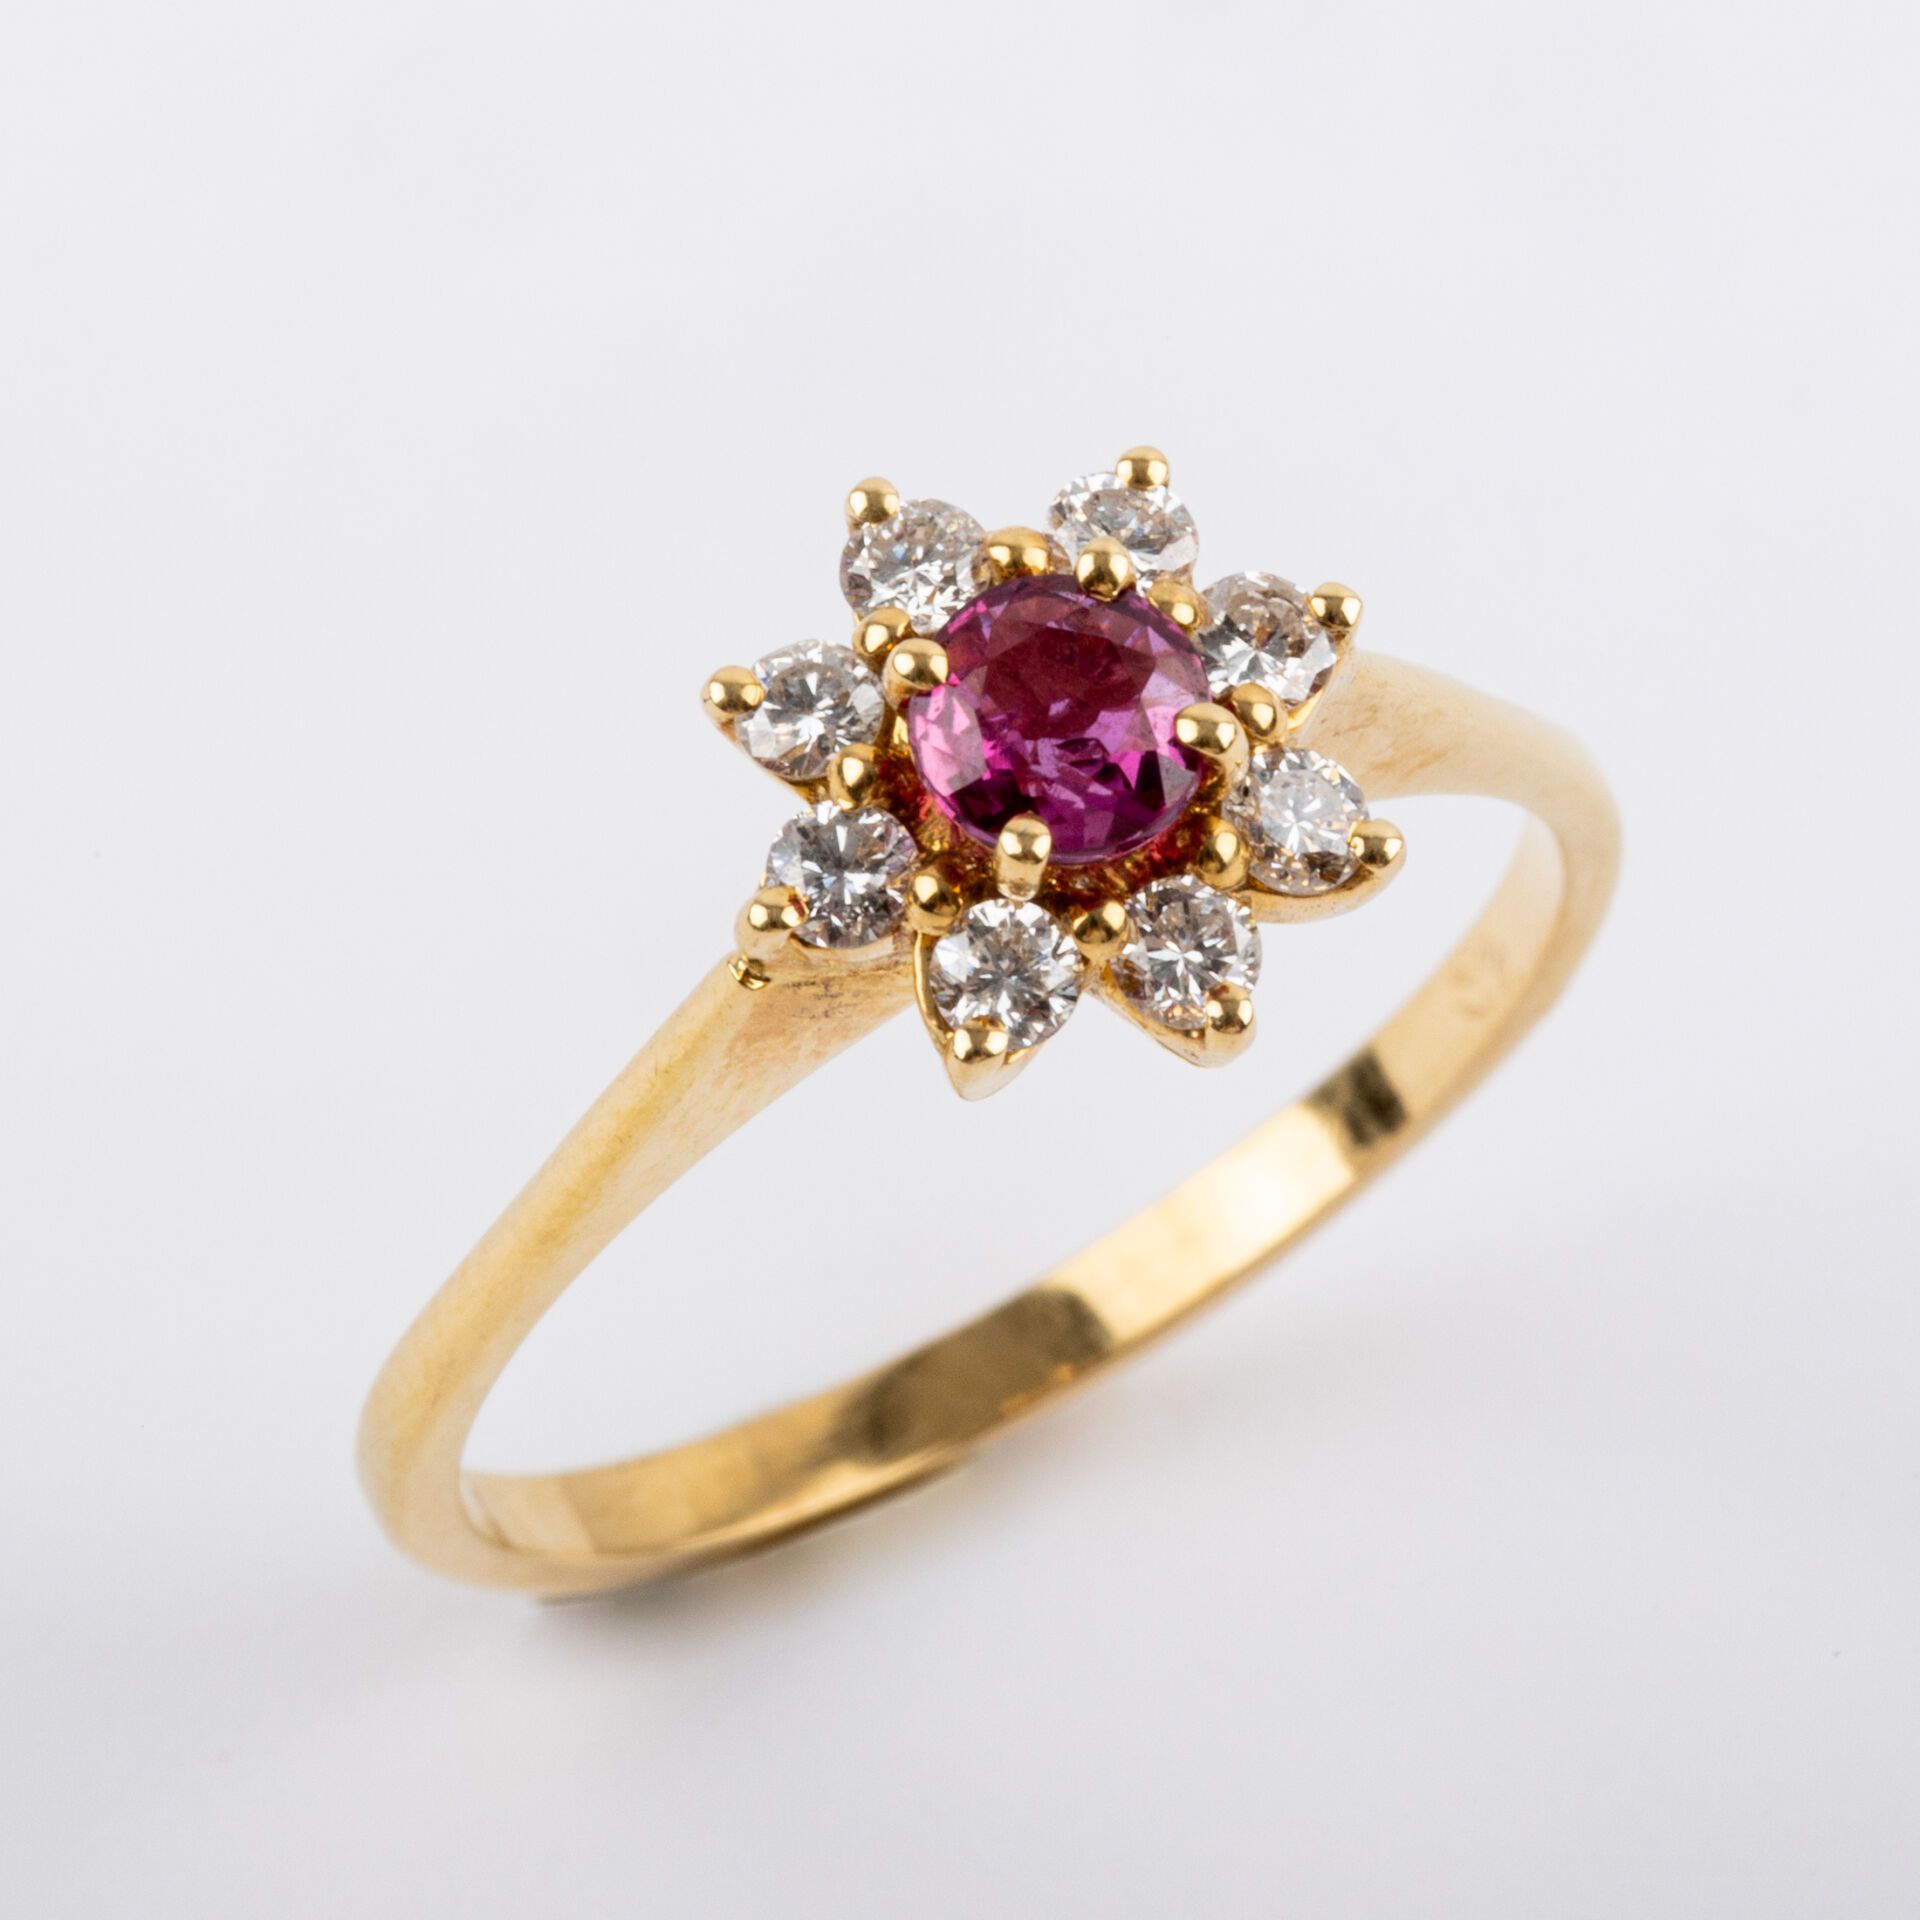 Null Bague Marguerite rubis, diamants taille brillant, monture or 18K
Poids brut&hellip;